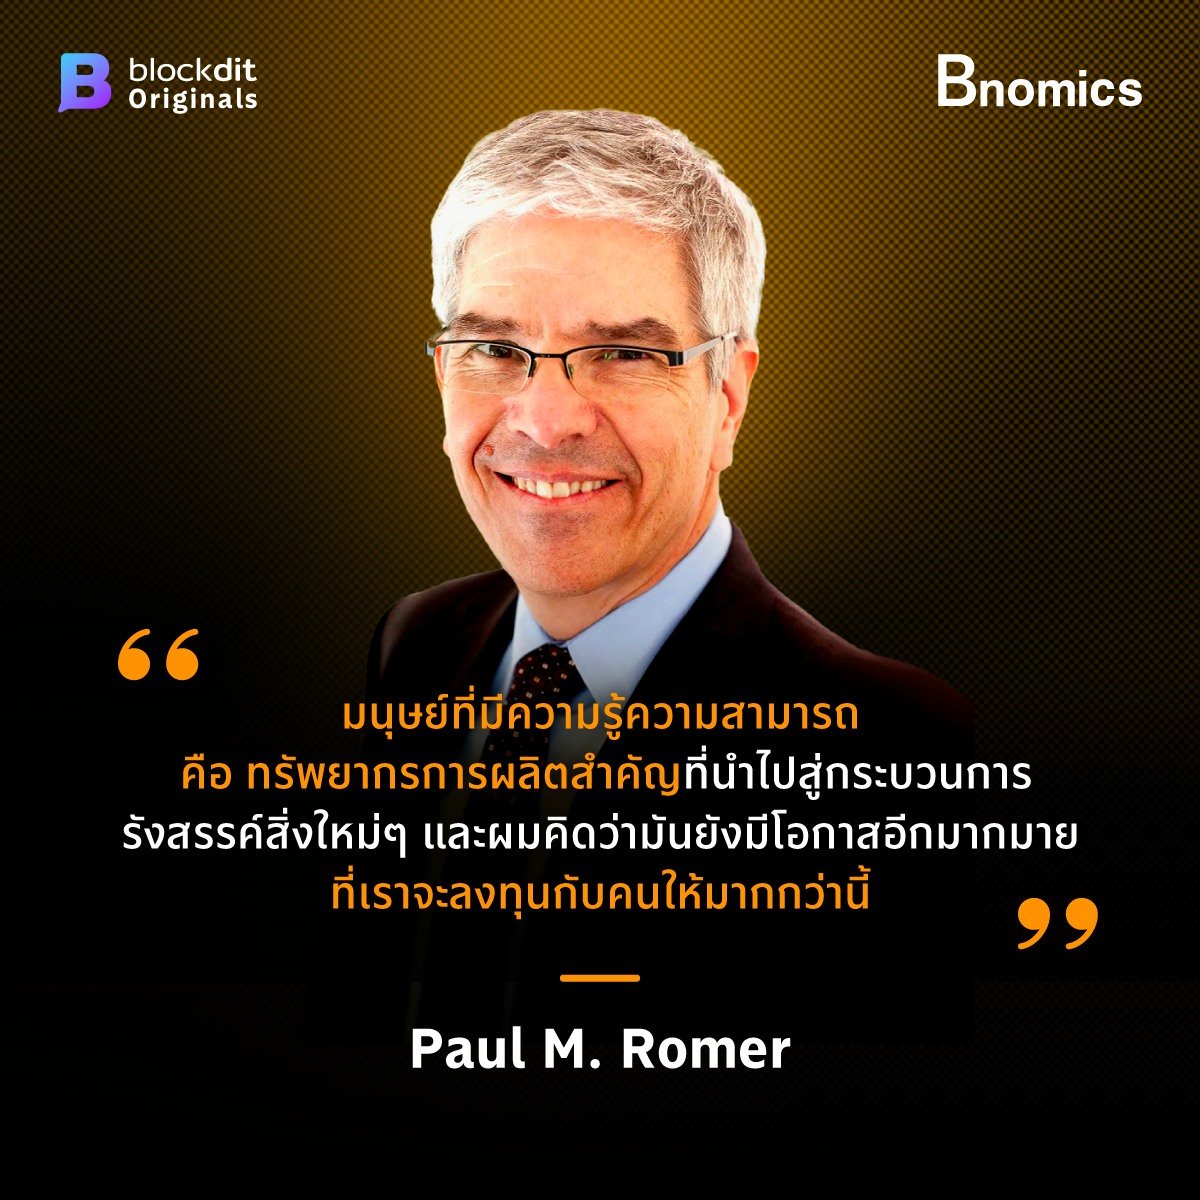 “Paul M. Romer” เจ้าของรางวัลโนเบลเศรษฐศาสตร์ ผู้เชื่อว่าการลงทุนที่ดีที่สุดคือ ลงทุนใน “ความรู้”